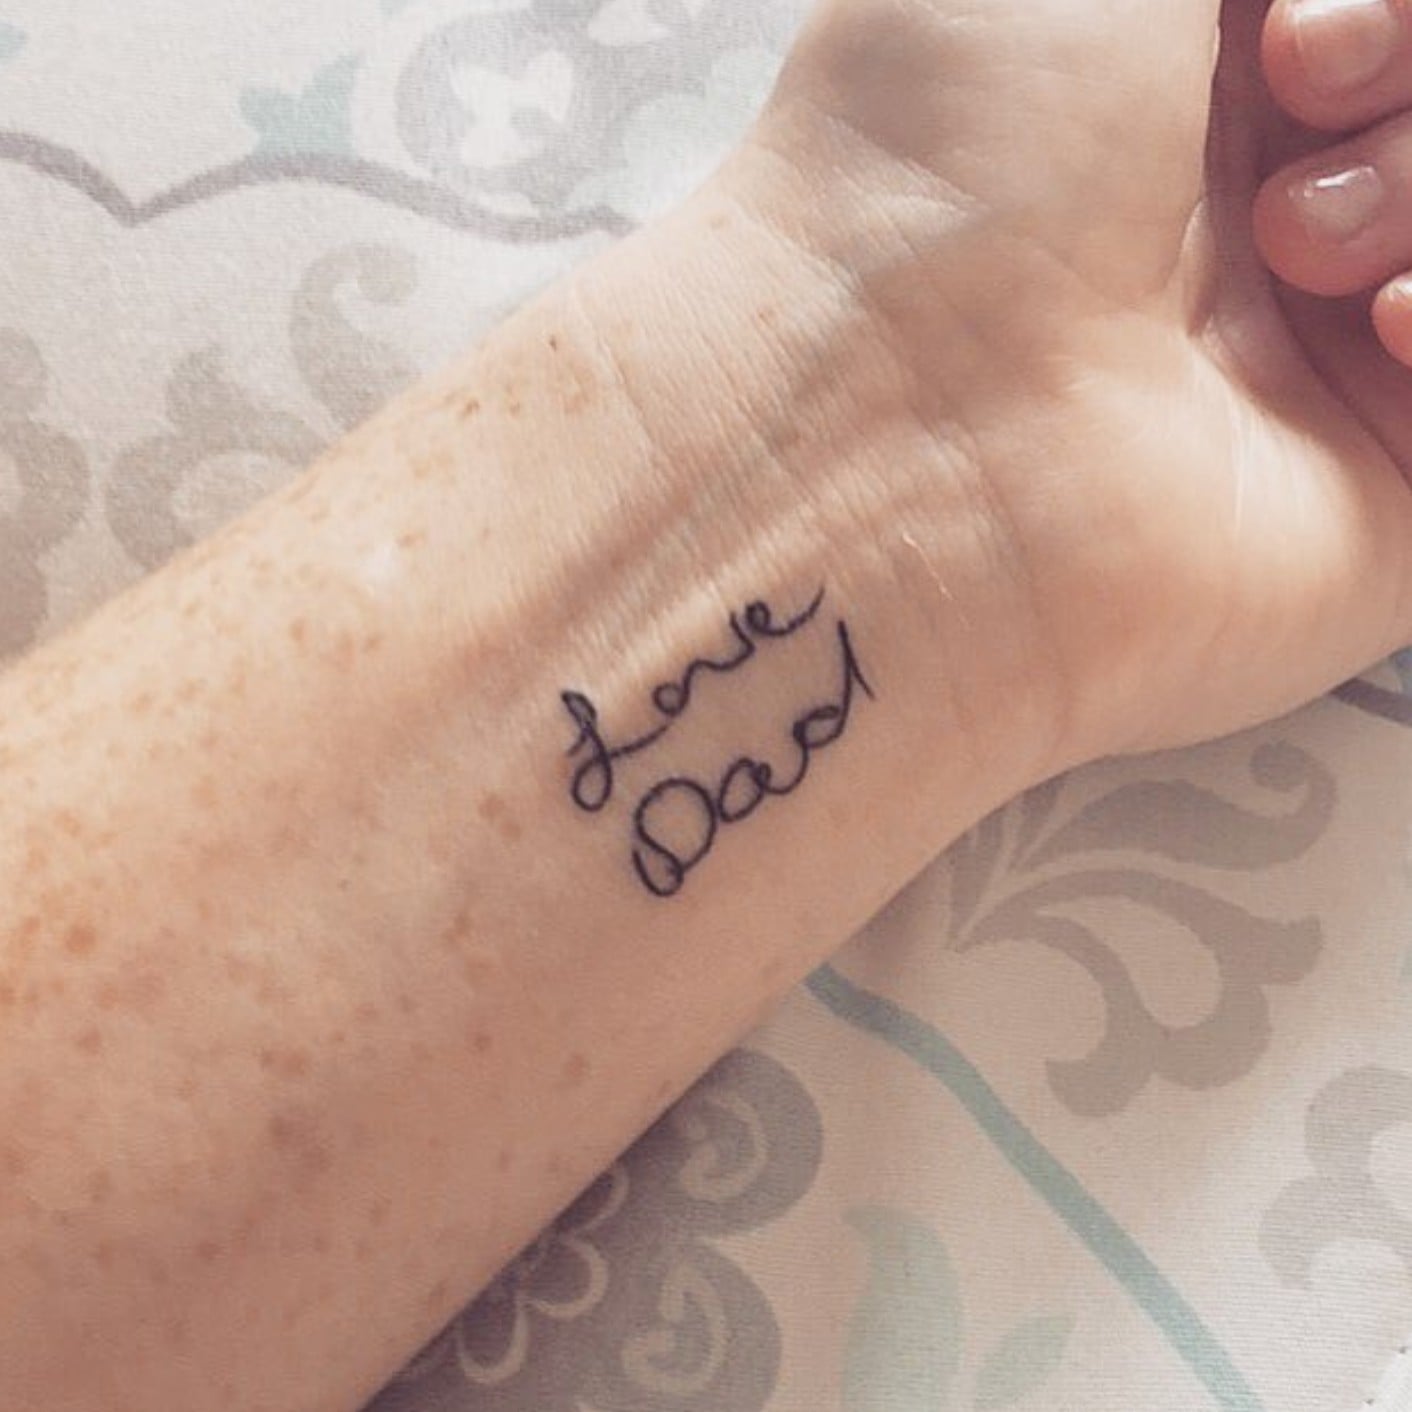 tattoo symbols lost loved ones